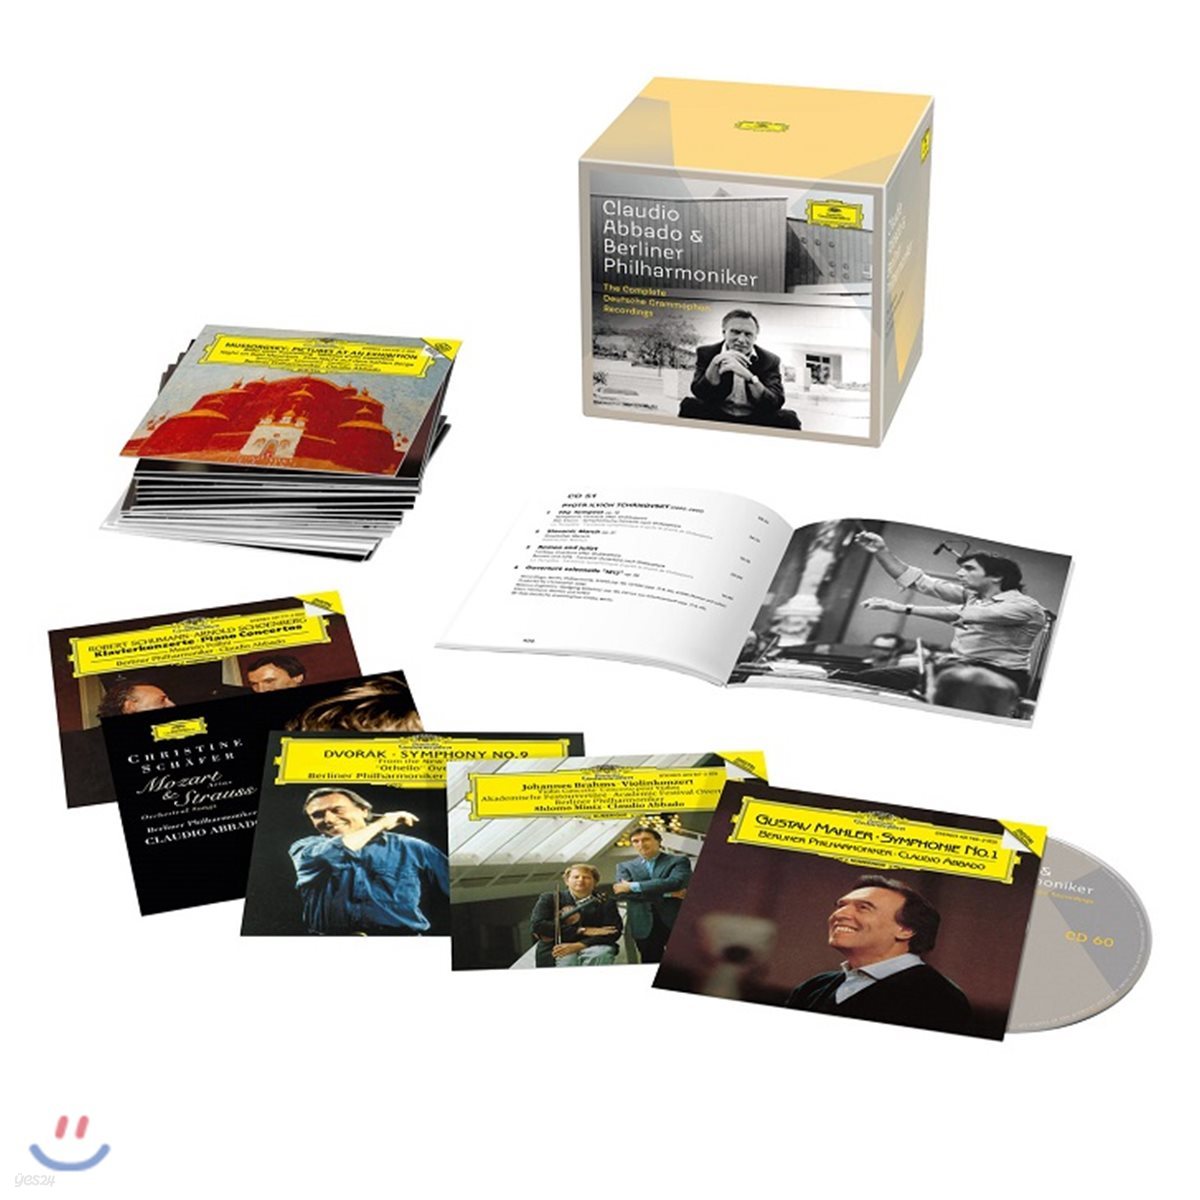 Claudio Abbado 클라우디오 아바도 & 베를린 필하모닉 DG 녹음 전집 (The Complete Recordings on Deutsche Grammophon)